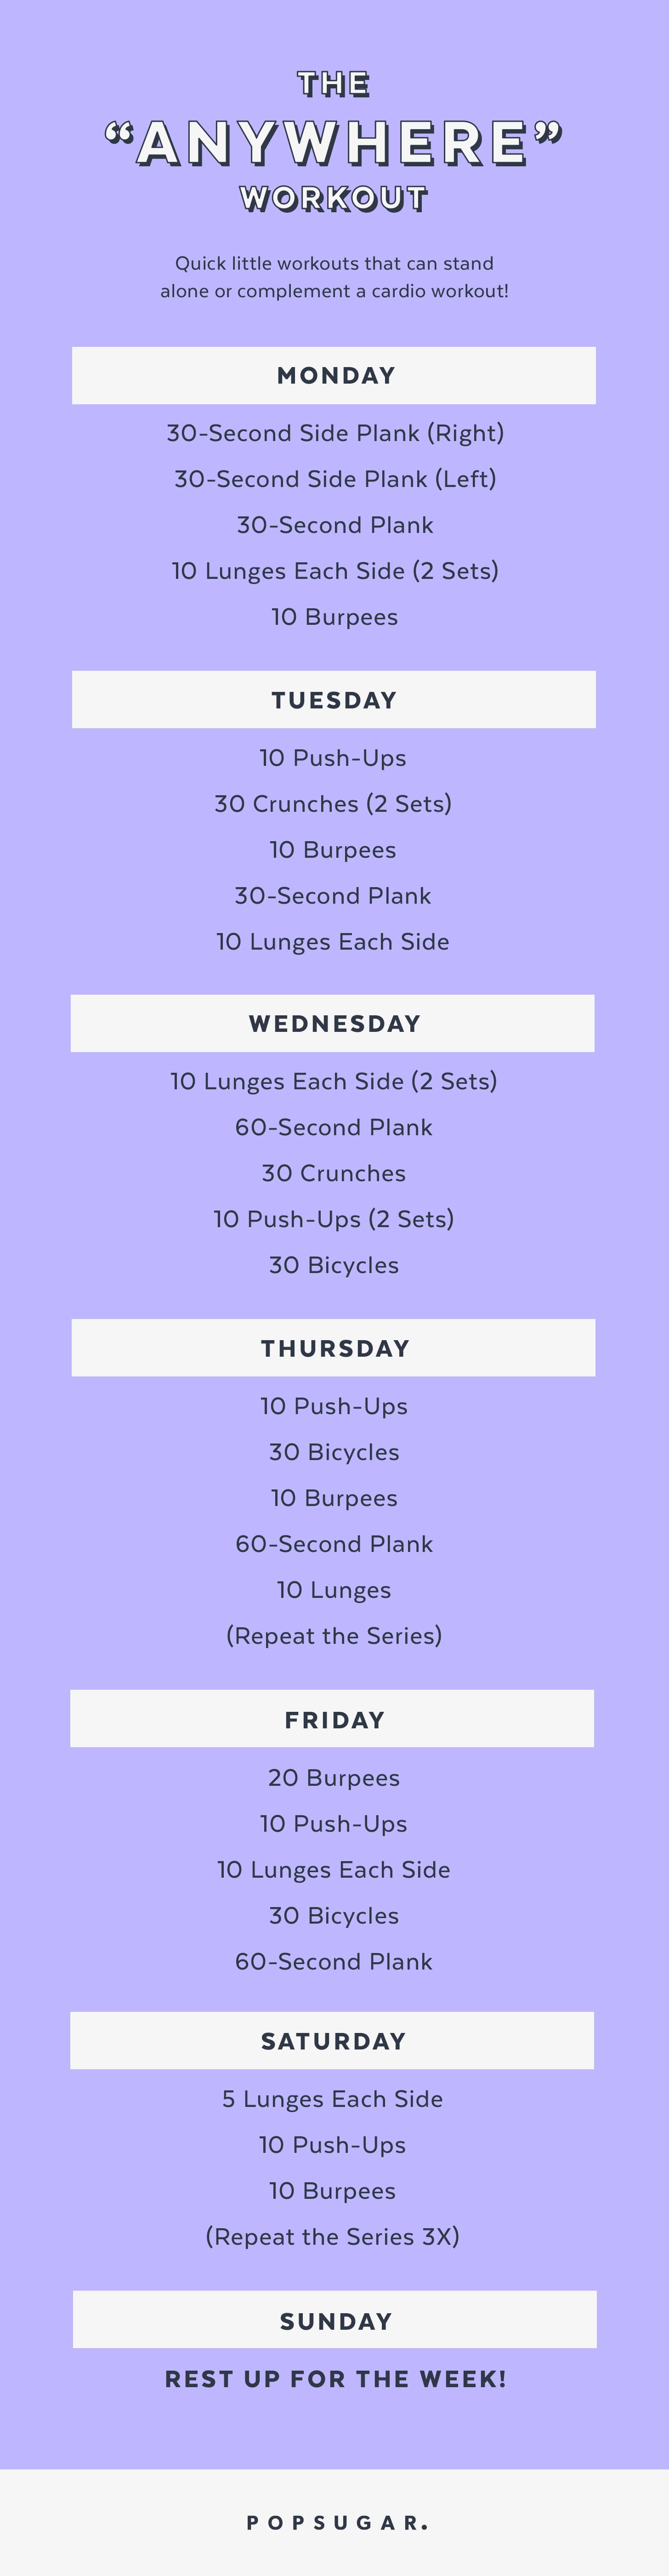 Workout Poster For the Week  POPSUGAR Fitness